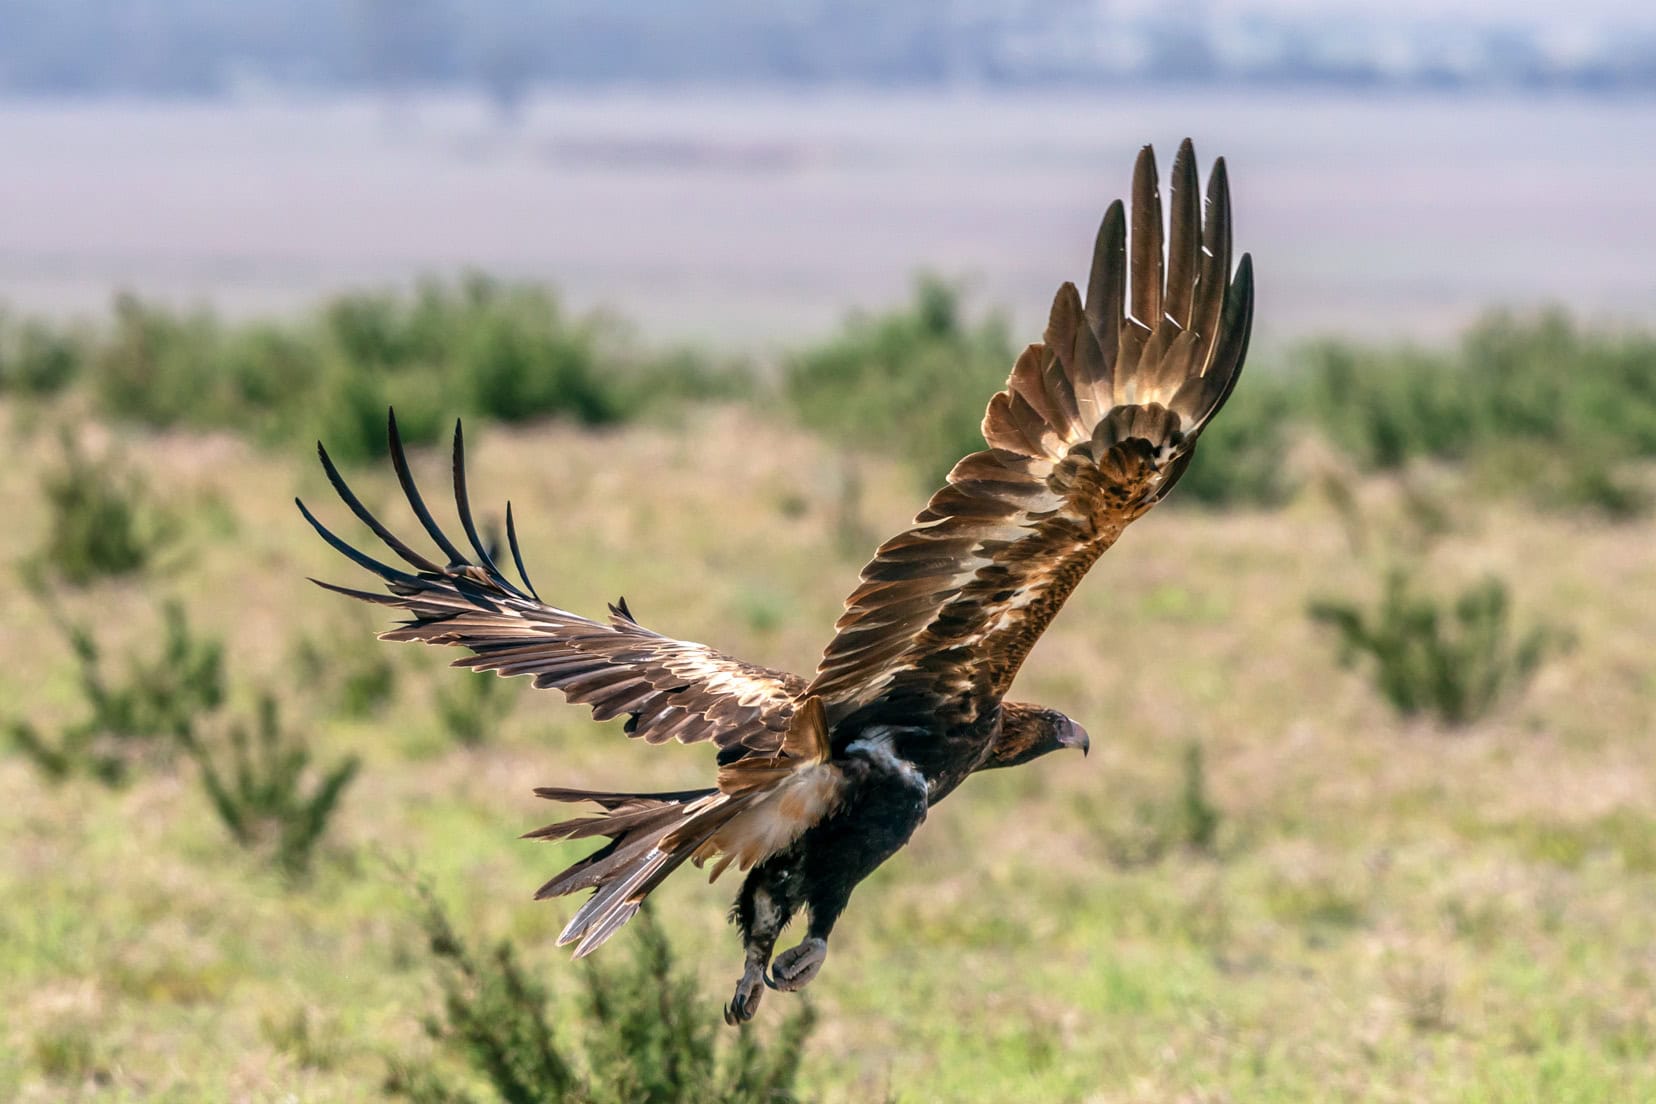 Wedge tailed eagle